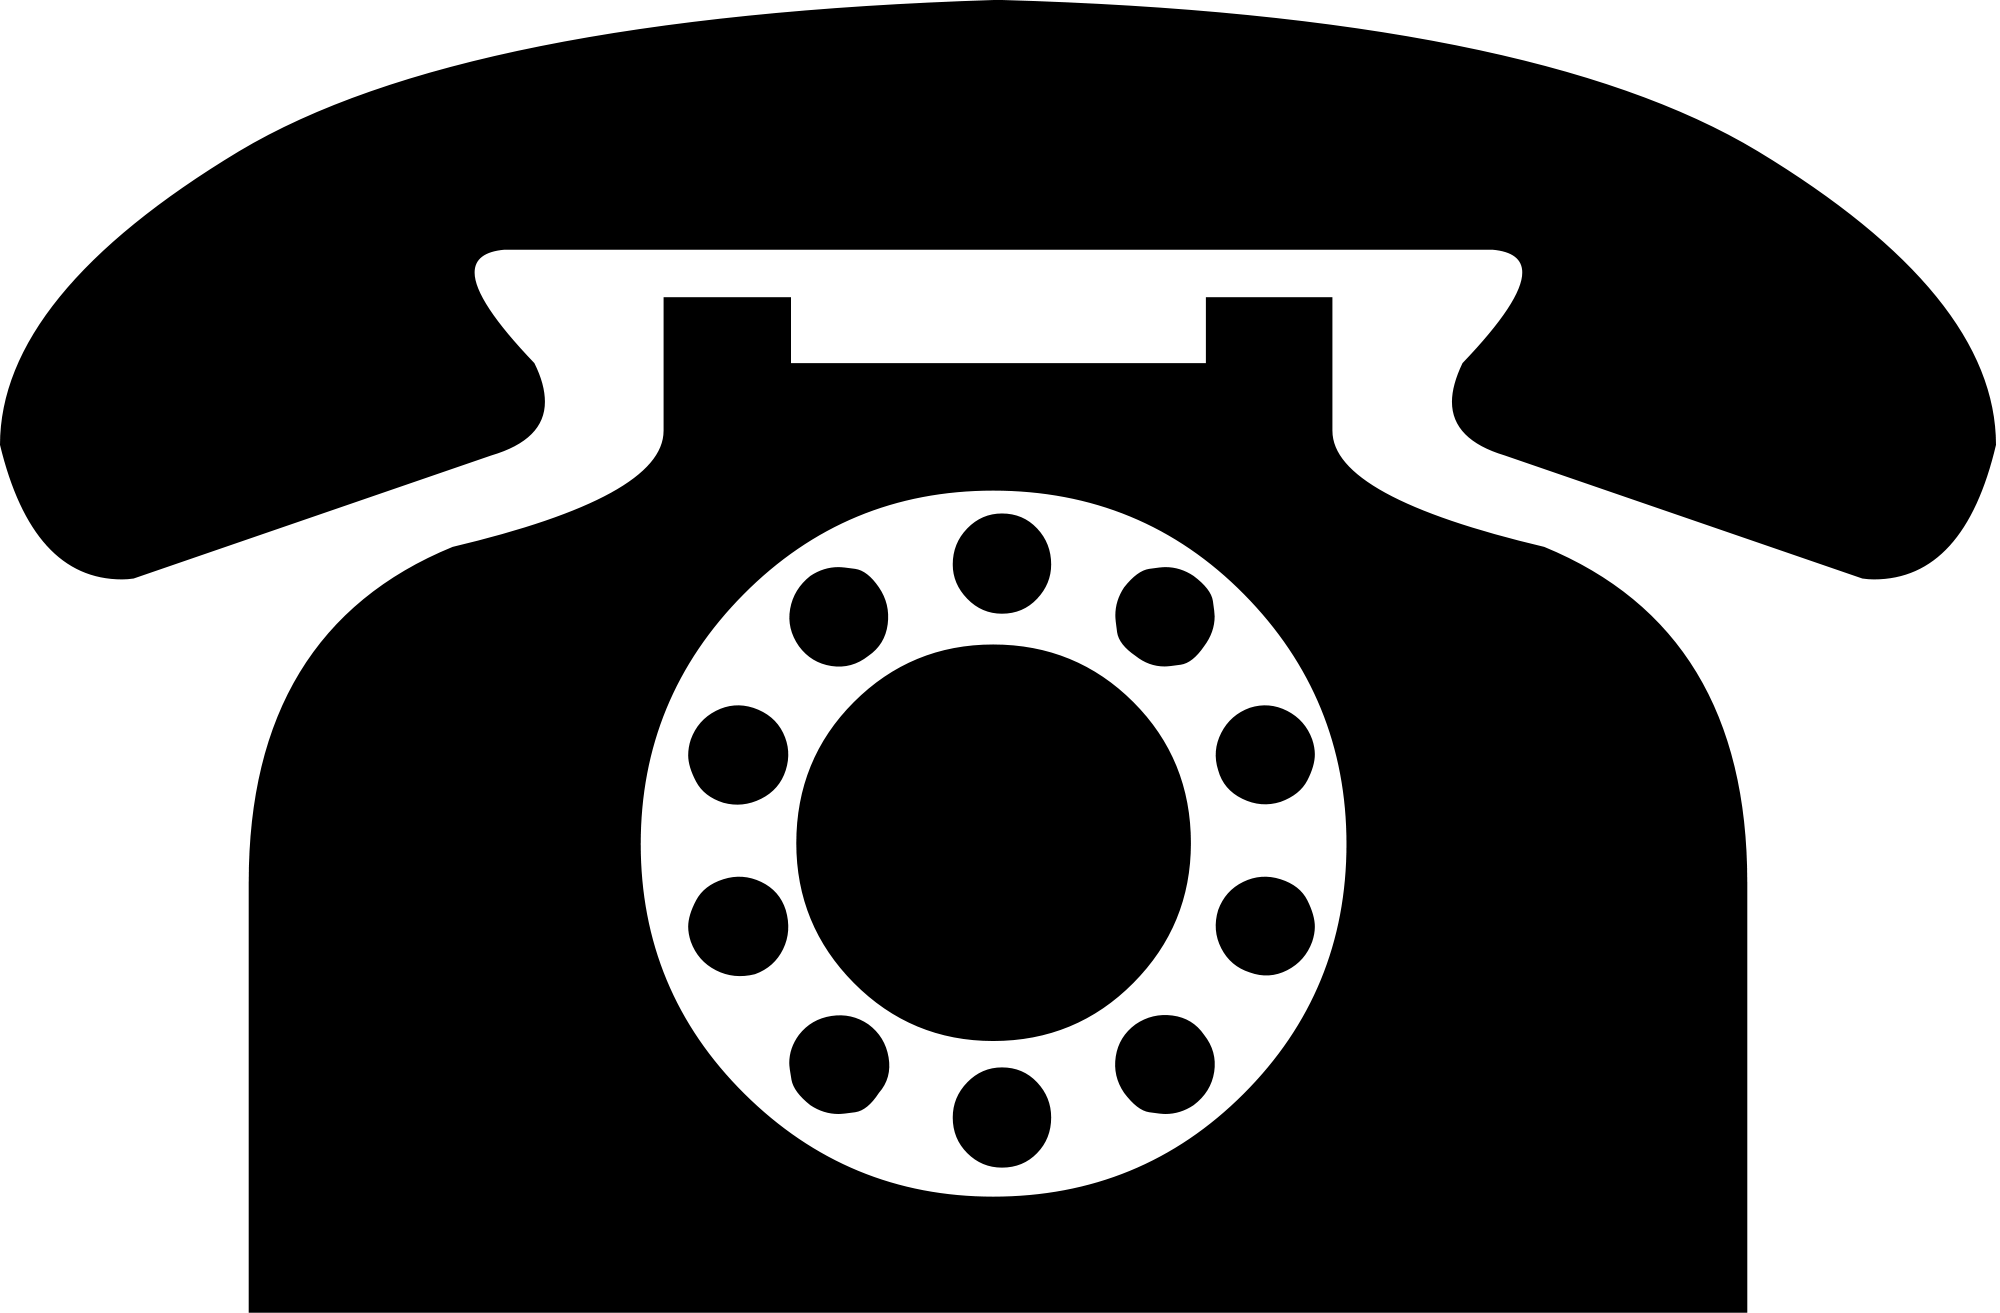 Black and White Telephone Logo - File:Black telephone icon from DejaVu Sans.svg - Wikimedia Commons